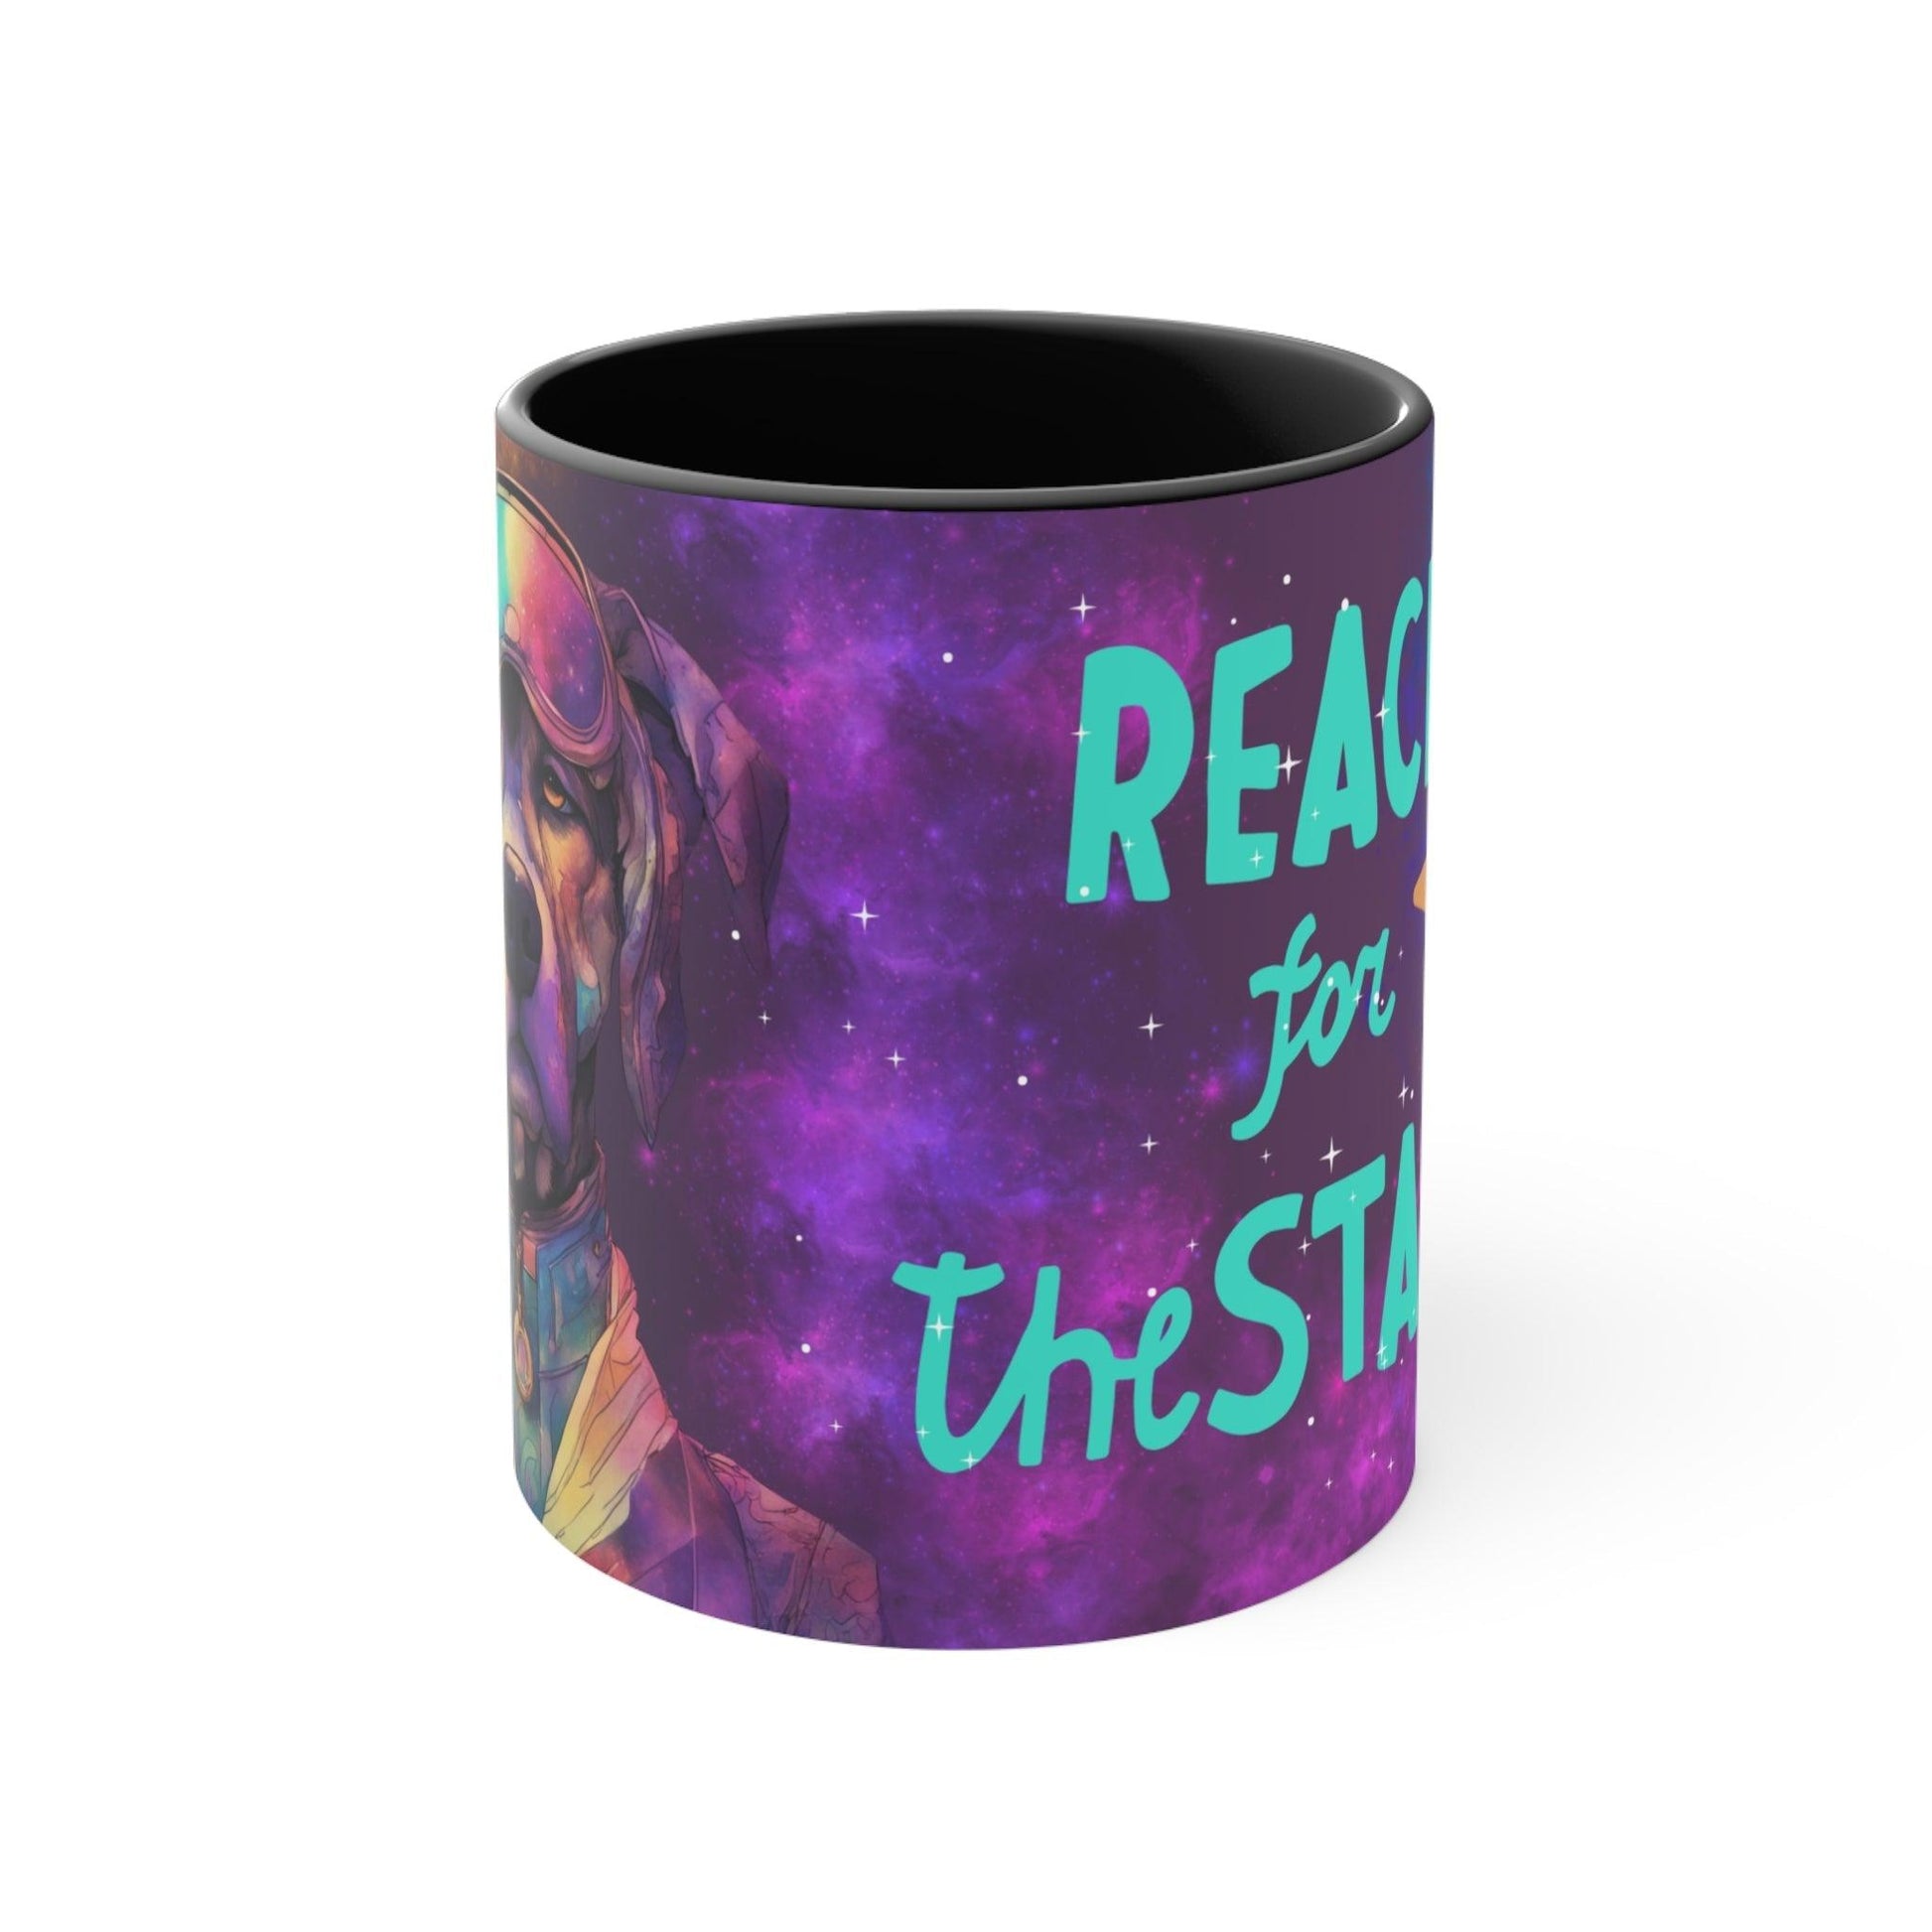 Mug "Reach for the Stars" - Dog Pilot - Accent Coffee Mug, 11oz - Soulshinecreators